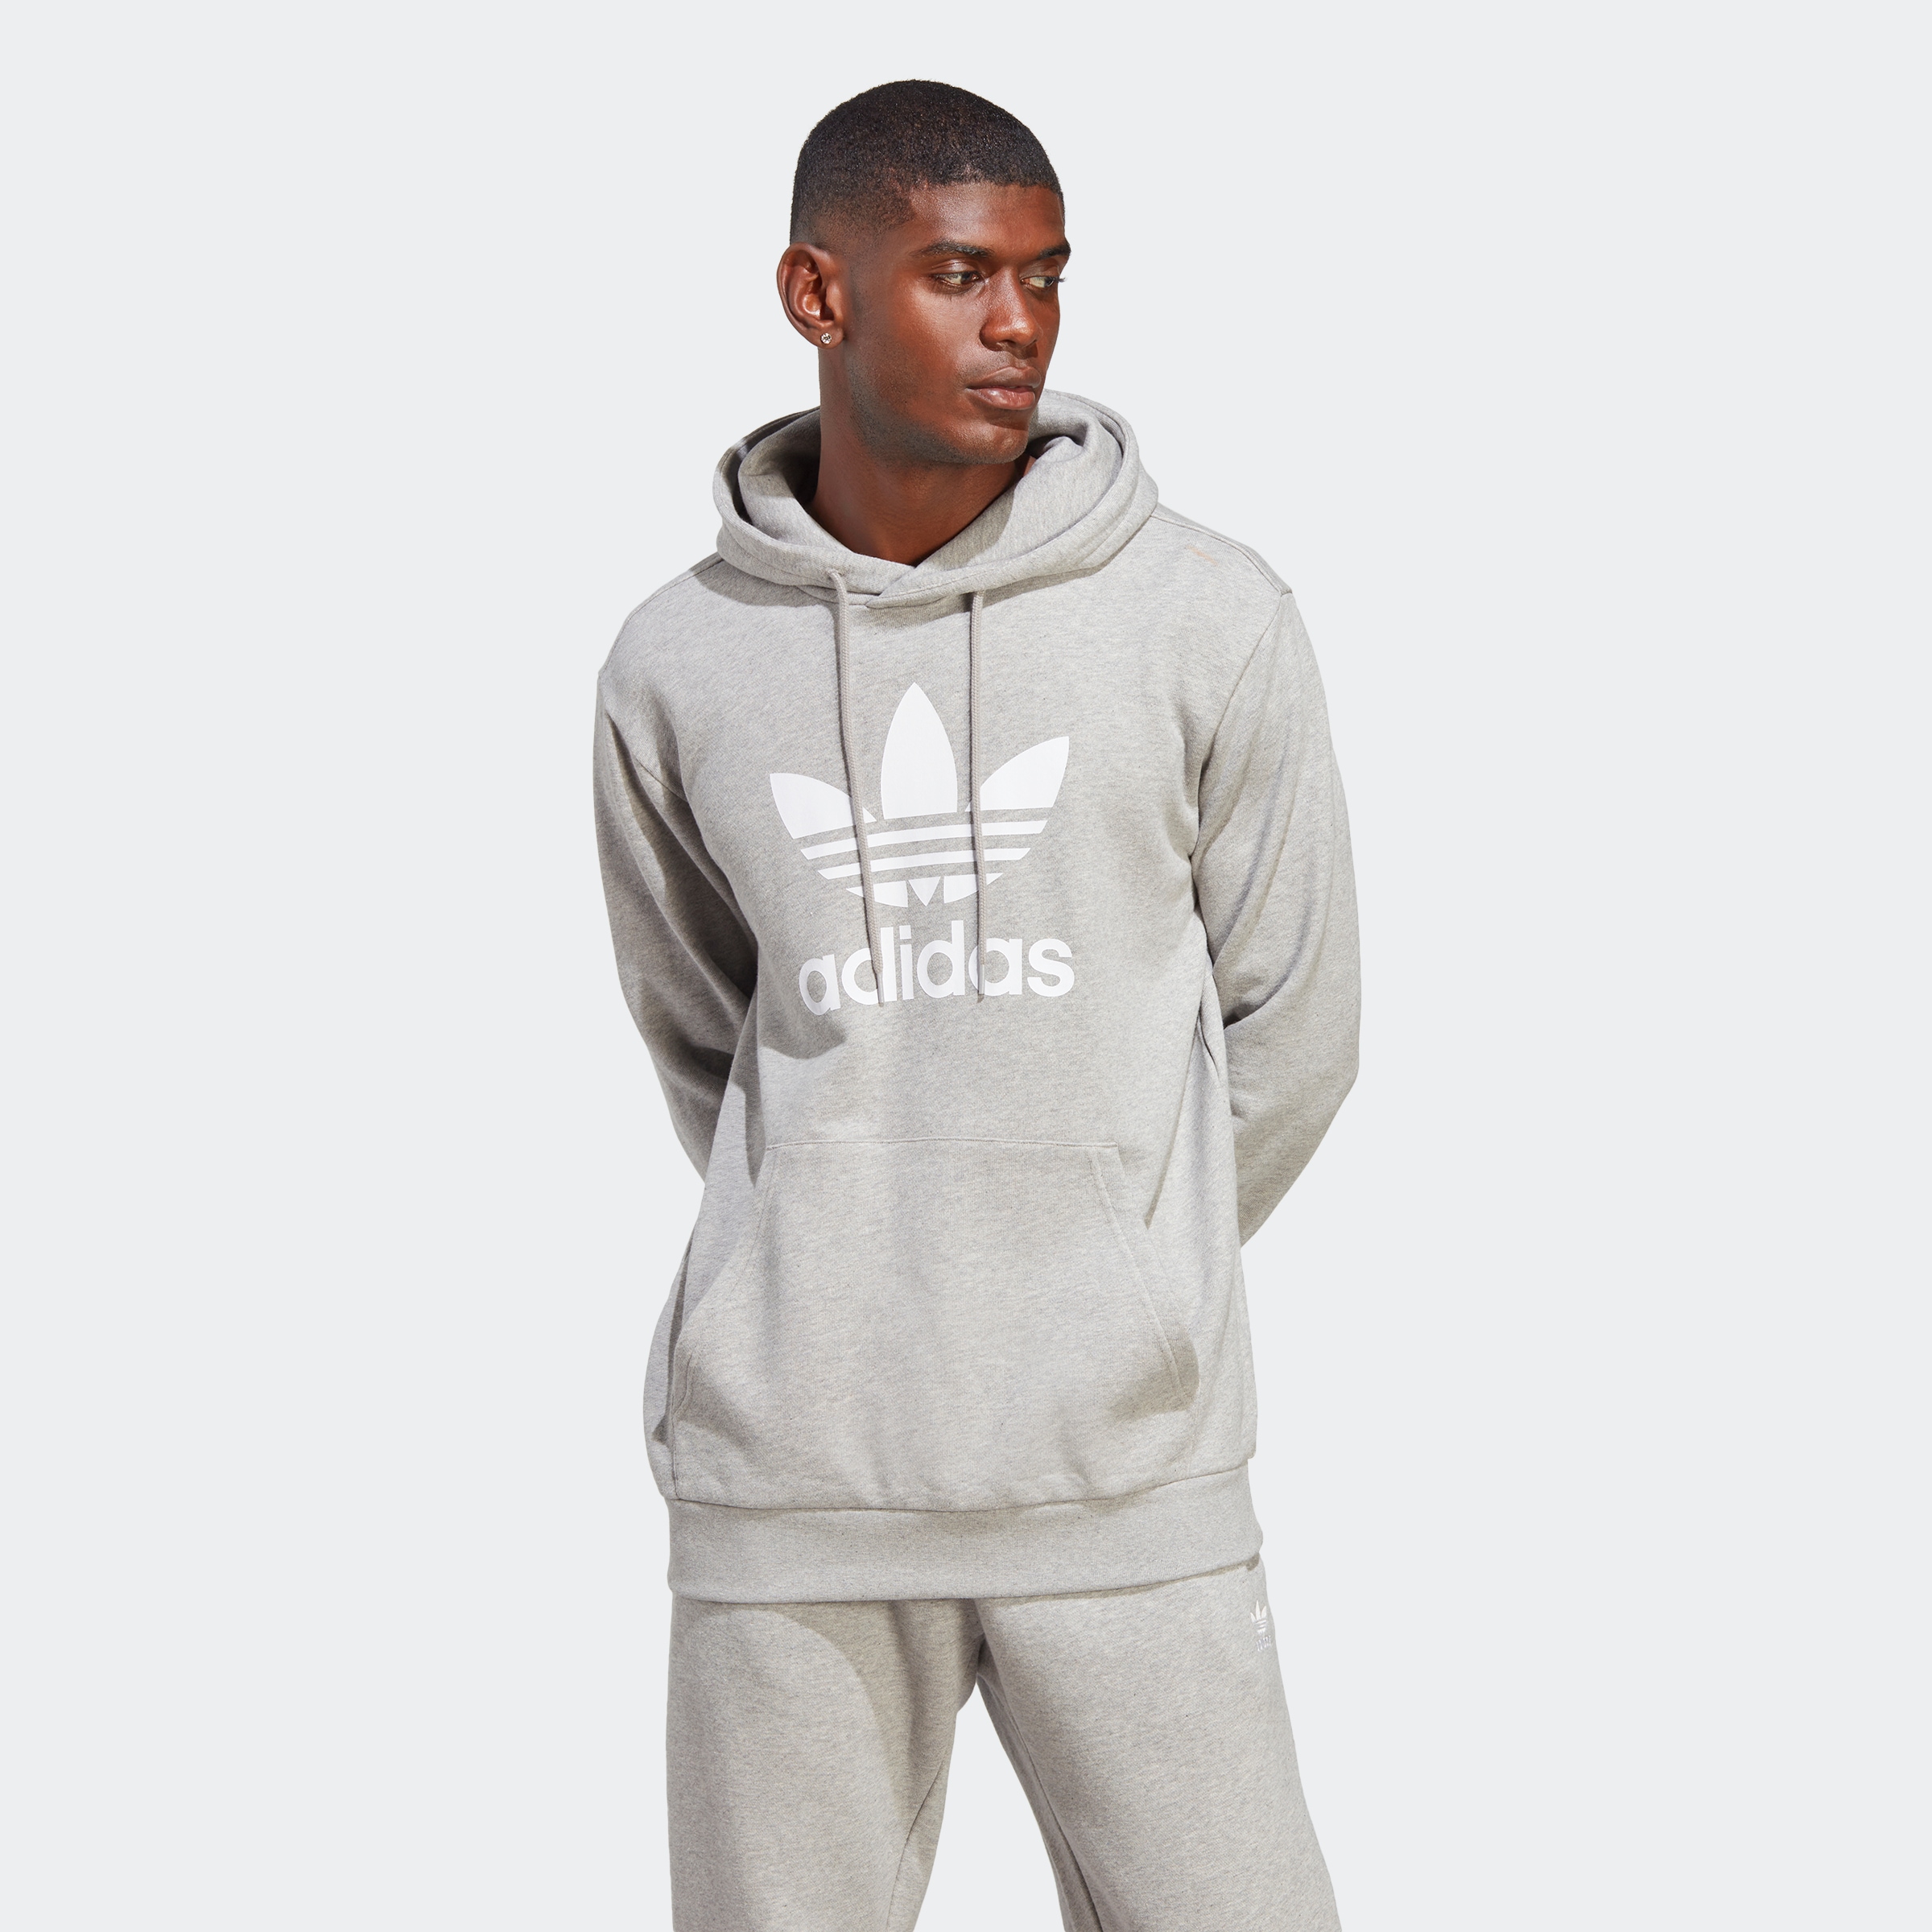 adidas IA4884 Trefoil Hoody Sweatshirt Men's medium Grey Heather M